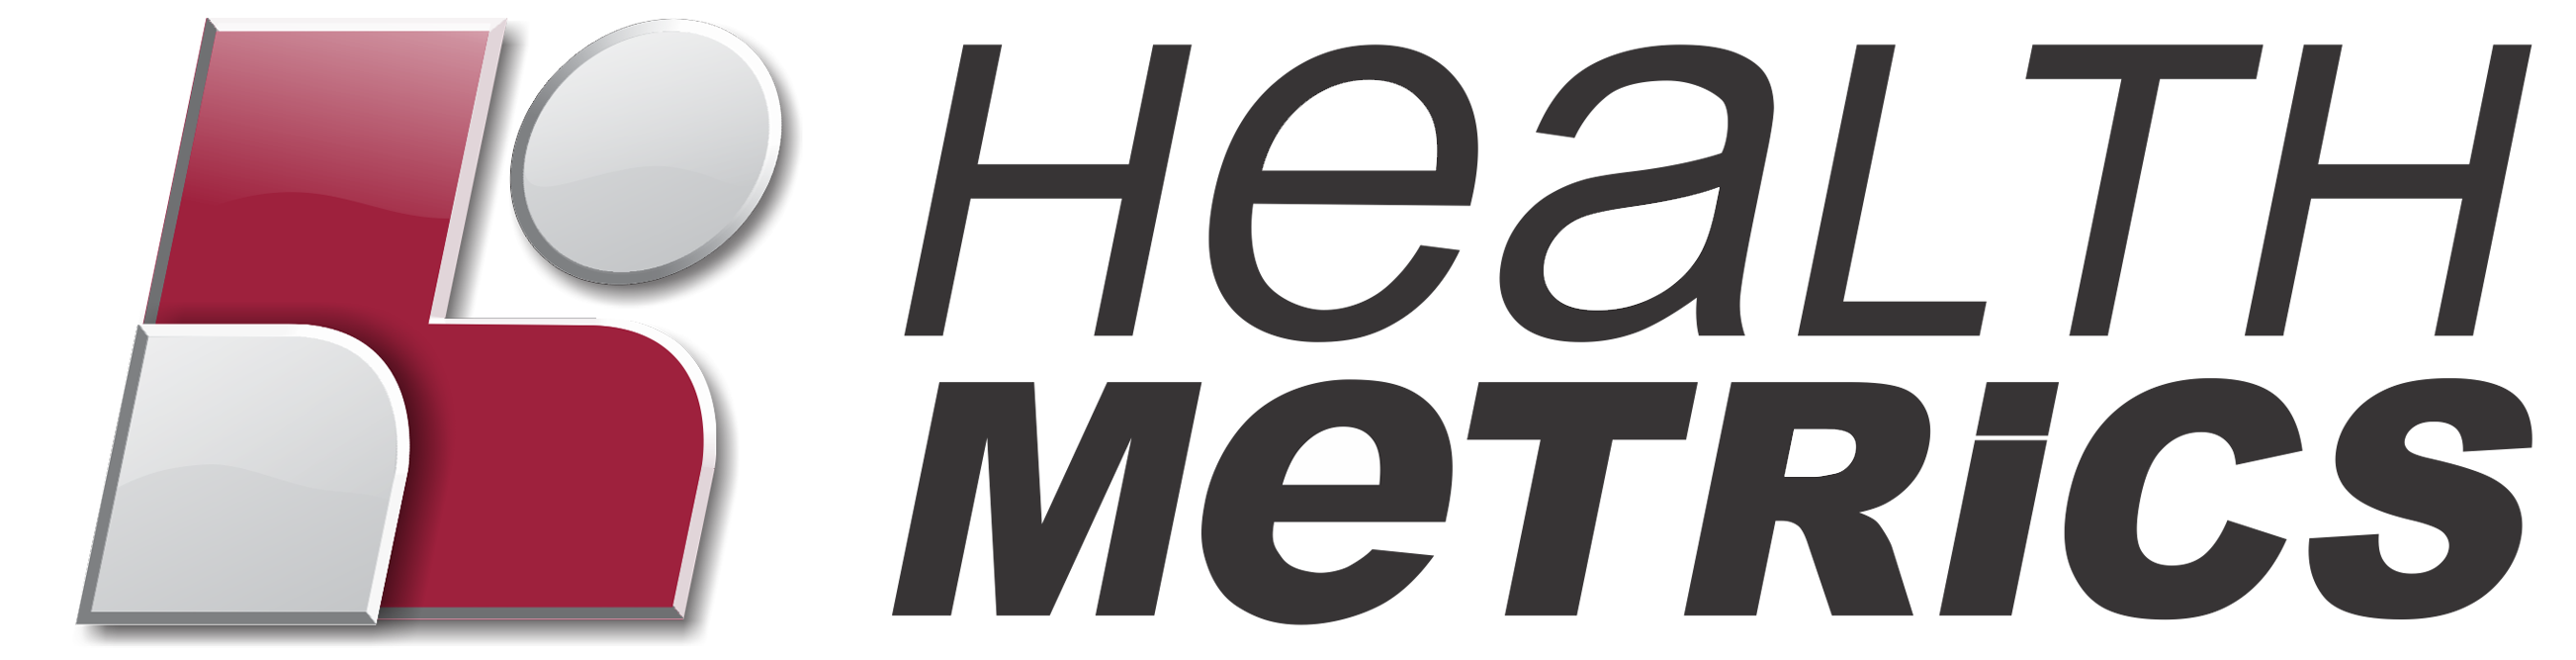 Health metrics login